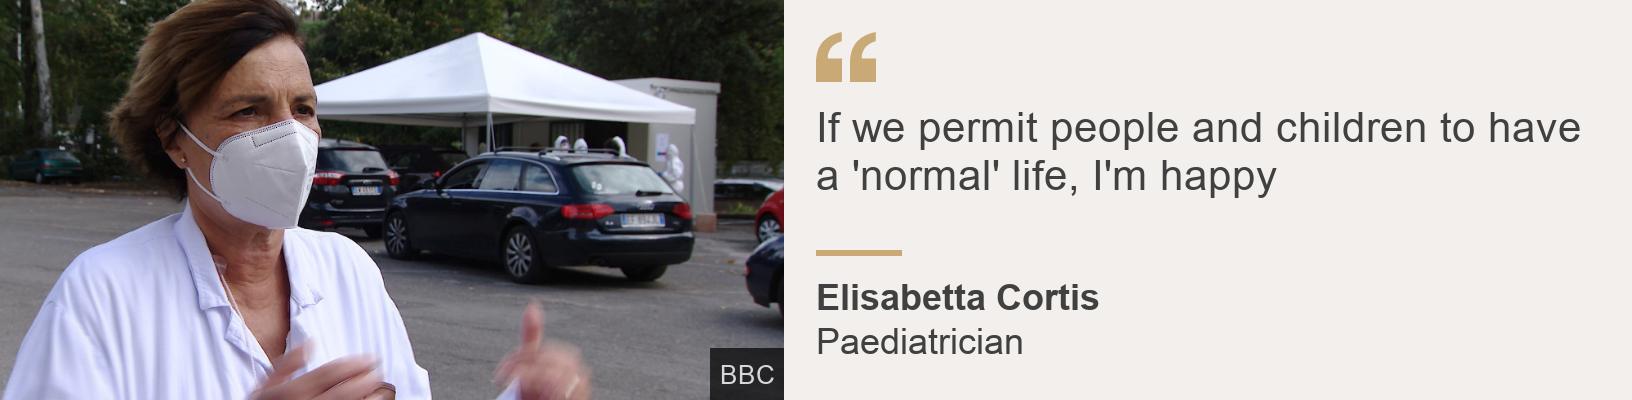 &quot;If we permit people and children to have a 'normal' life, I'm happy&quot;, Source: Elisabetta Cortis, Source description: Paediatrician, Image: Elisabetta Cortis